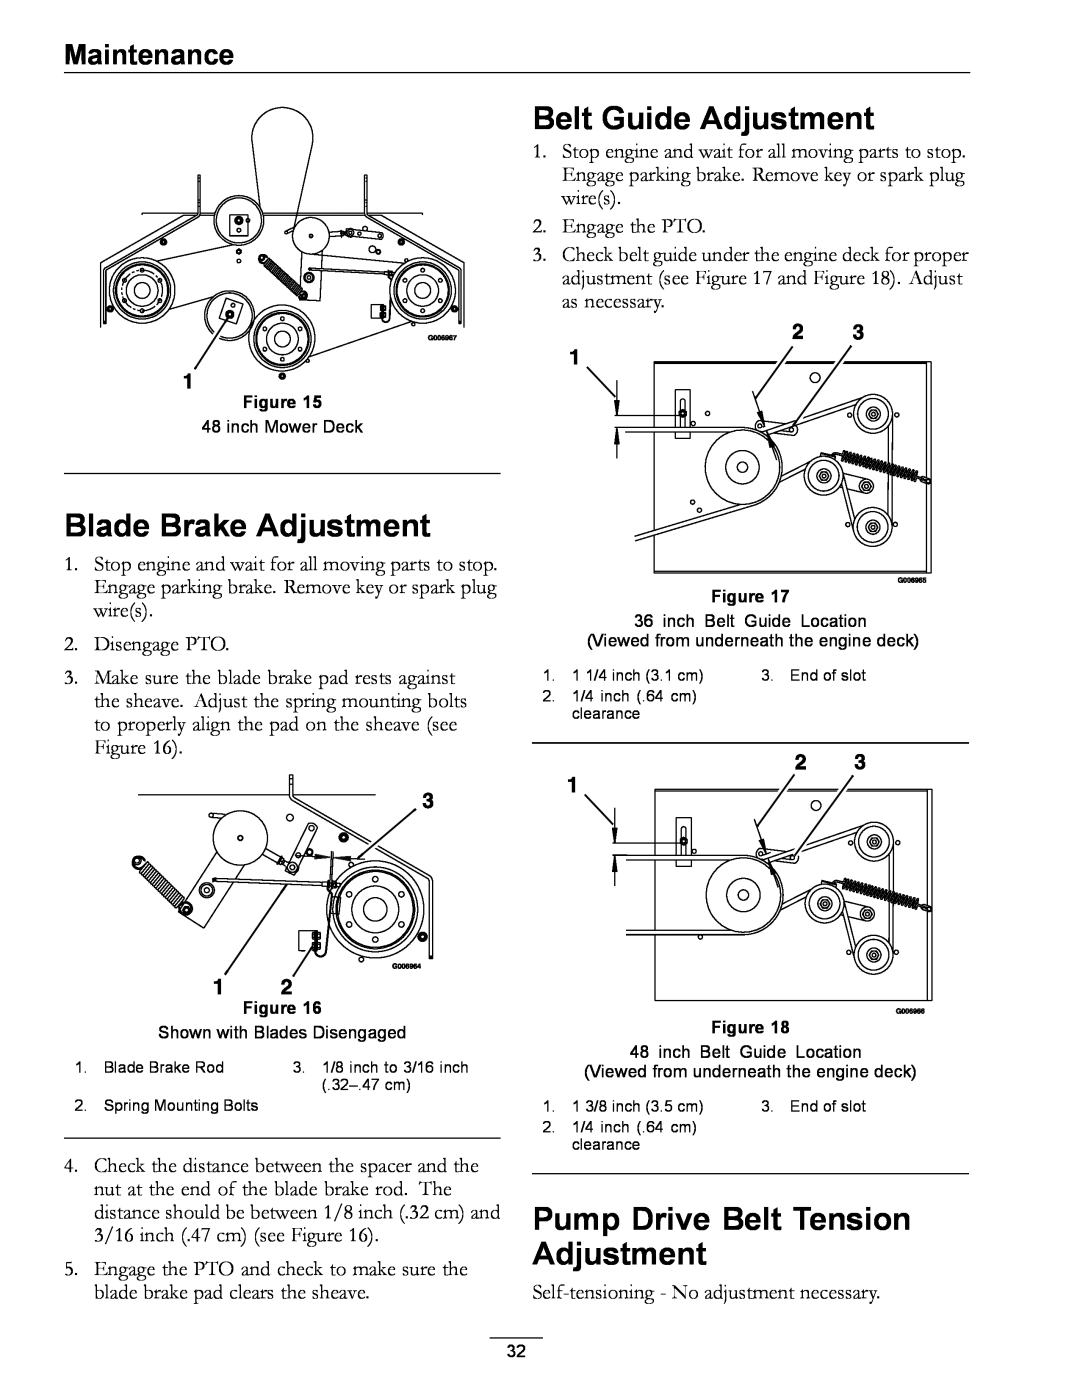 Exmark 4500-355 manual Blade Brake Adjustment, Belt Guide Adjustment, Pump Drive Belt Tension Adjustment, Maintenance 